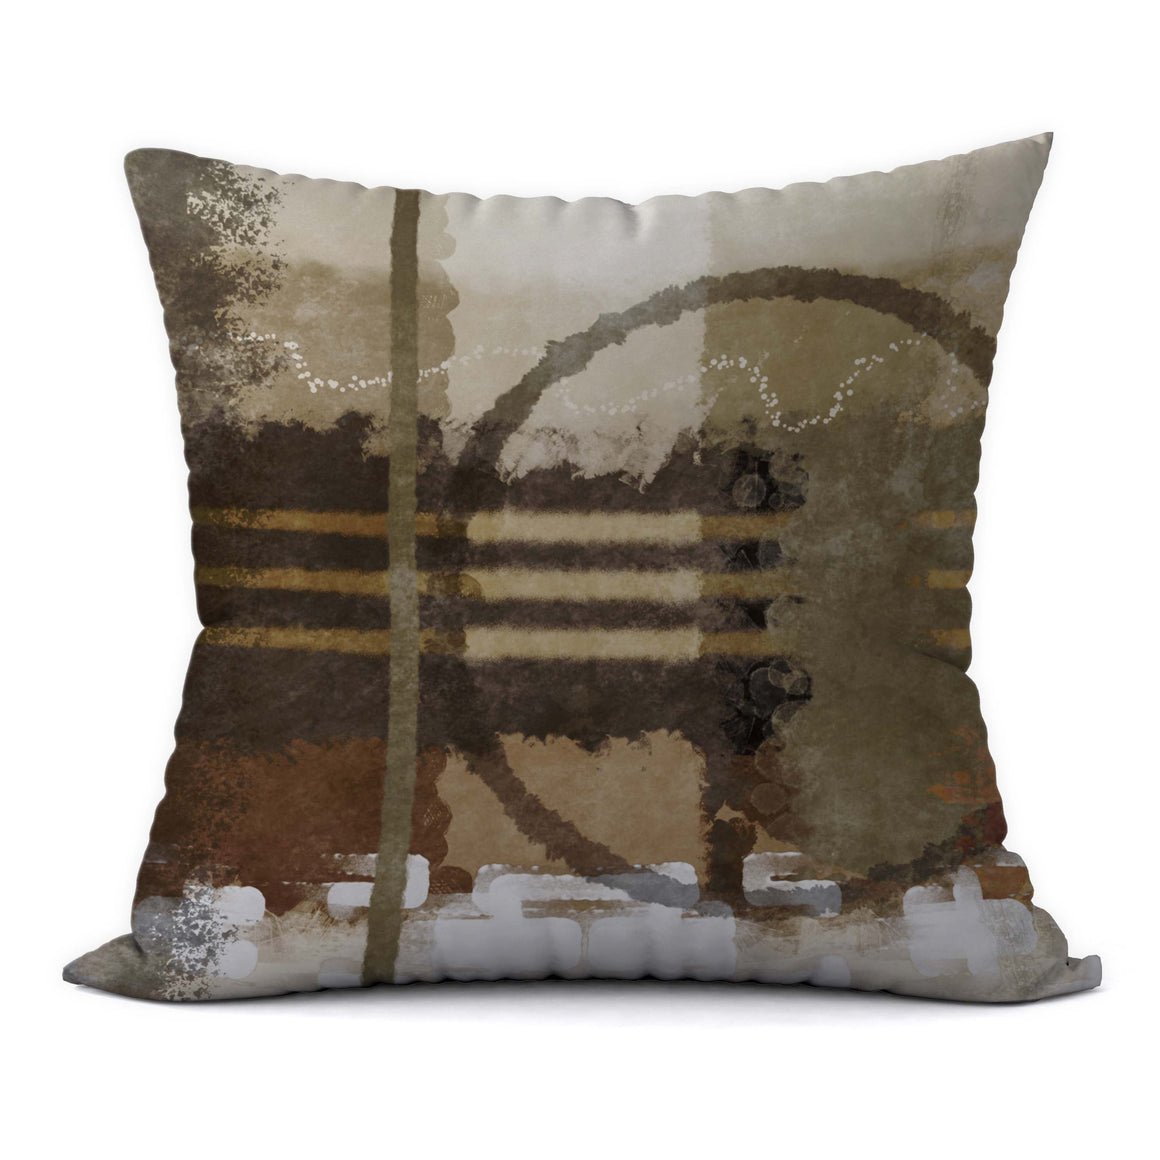 Mocha Latte #888 Decorative Throw Pillow